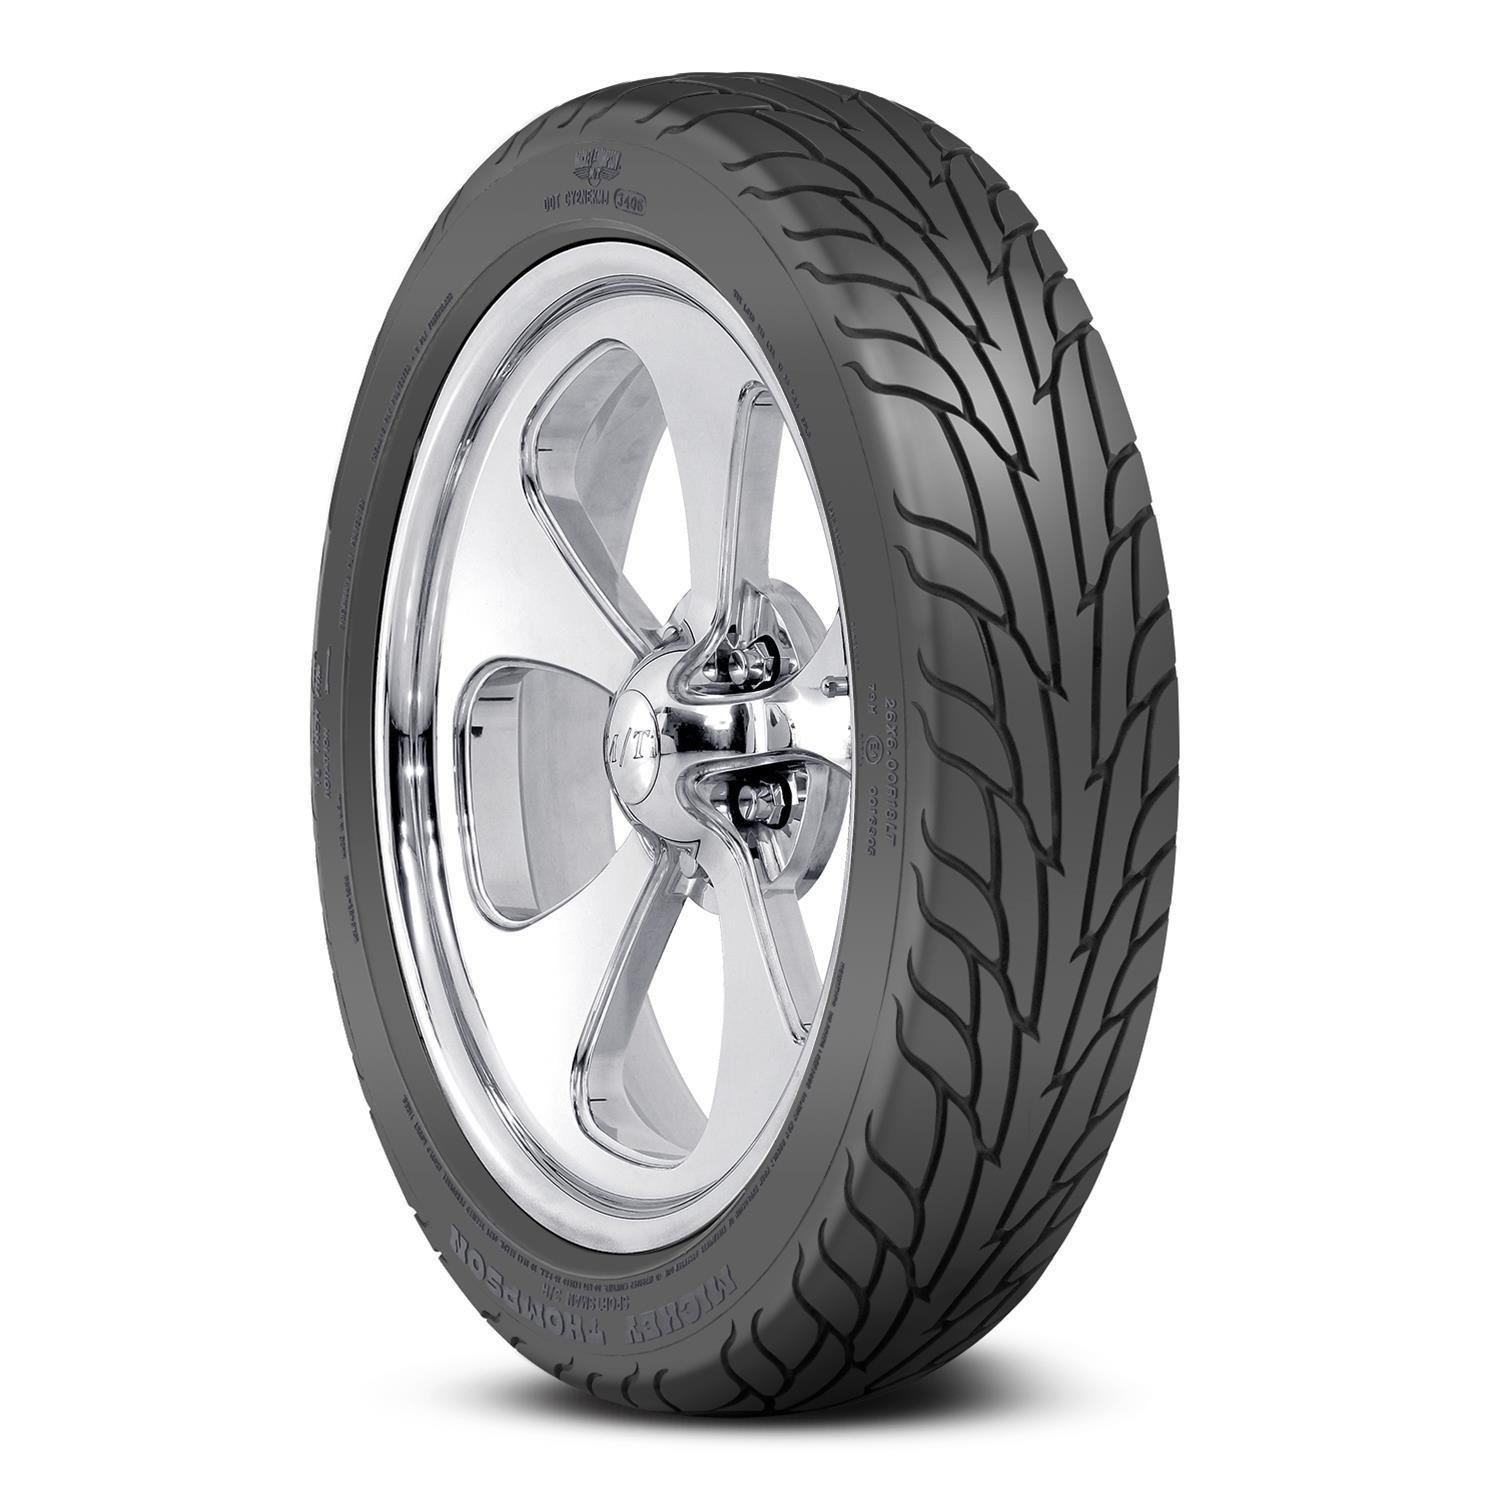 28x6.00R17LT Sportsman S/R Front Tire - Burlile Performance Products